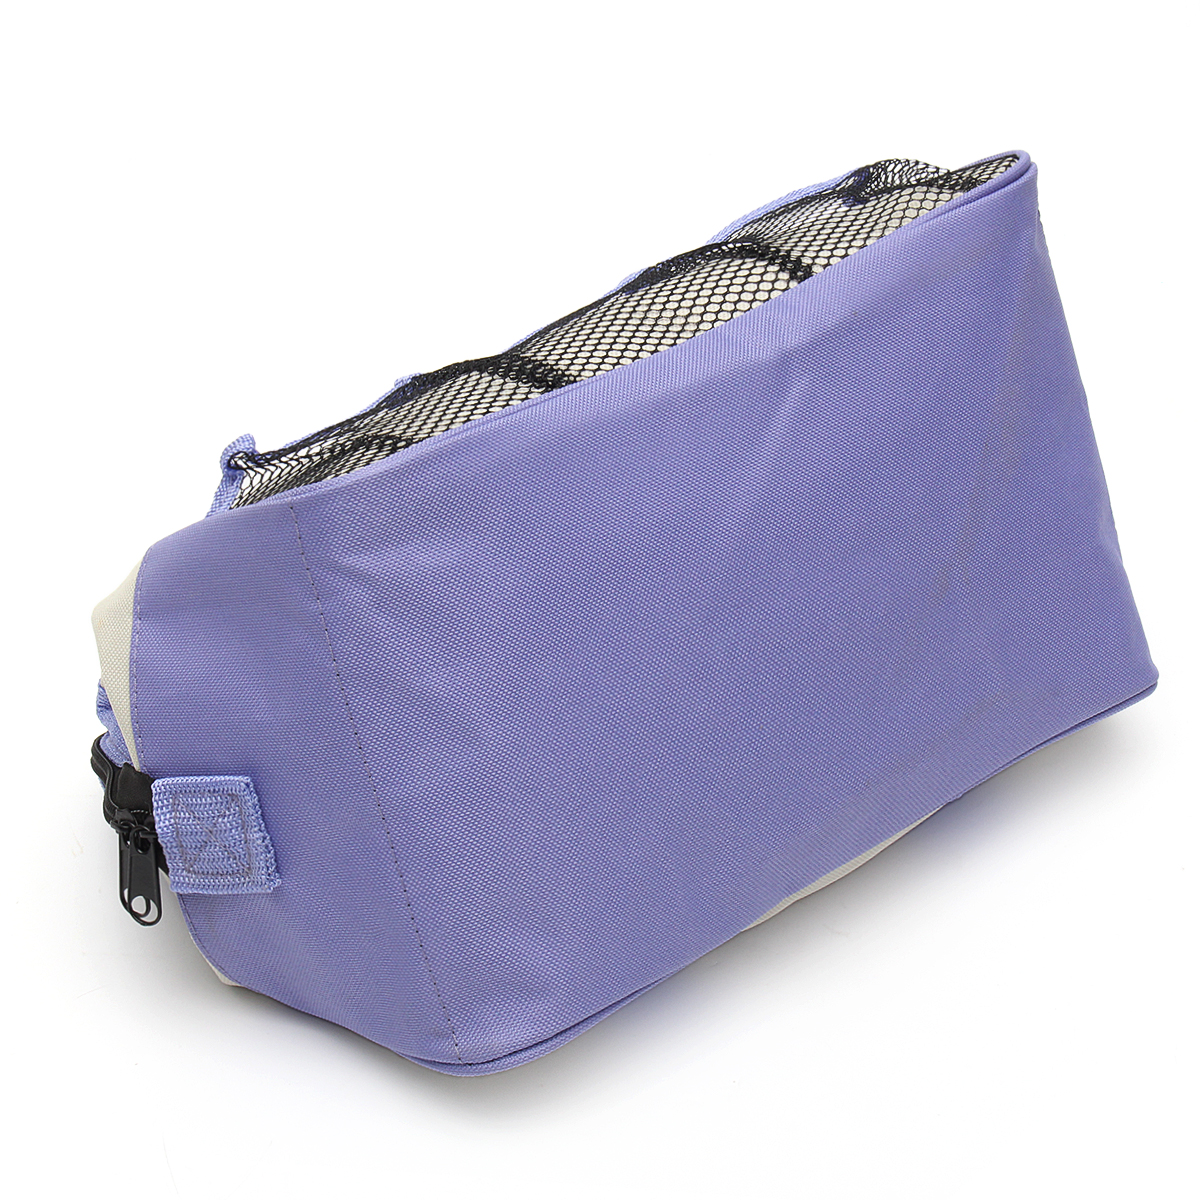 Multifunction-Repair-Tool-Bag-Canvas-Fabric-Electrician-Pocket-Storage-Case-Bag-1347101-8